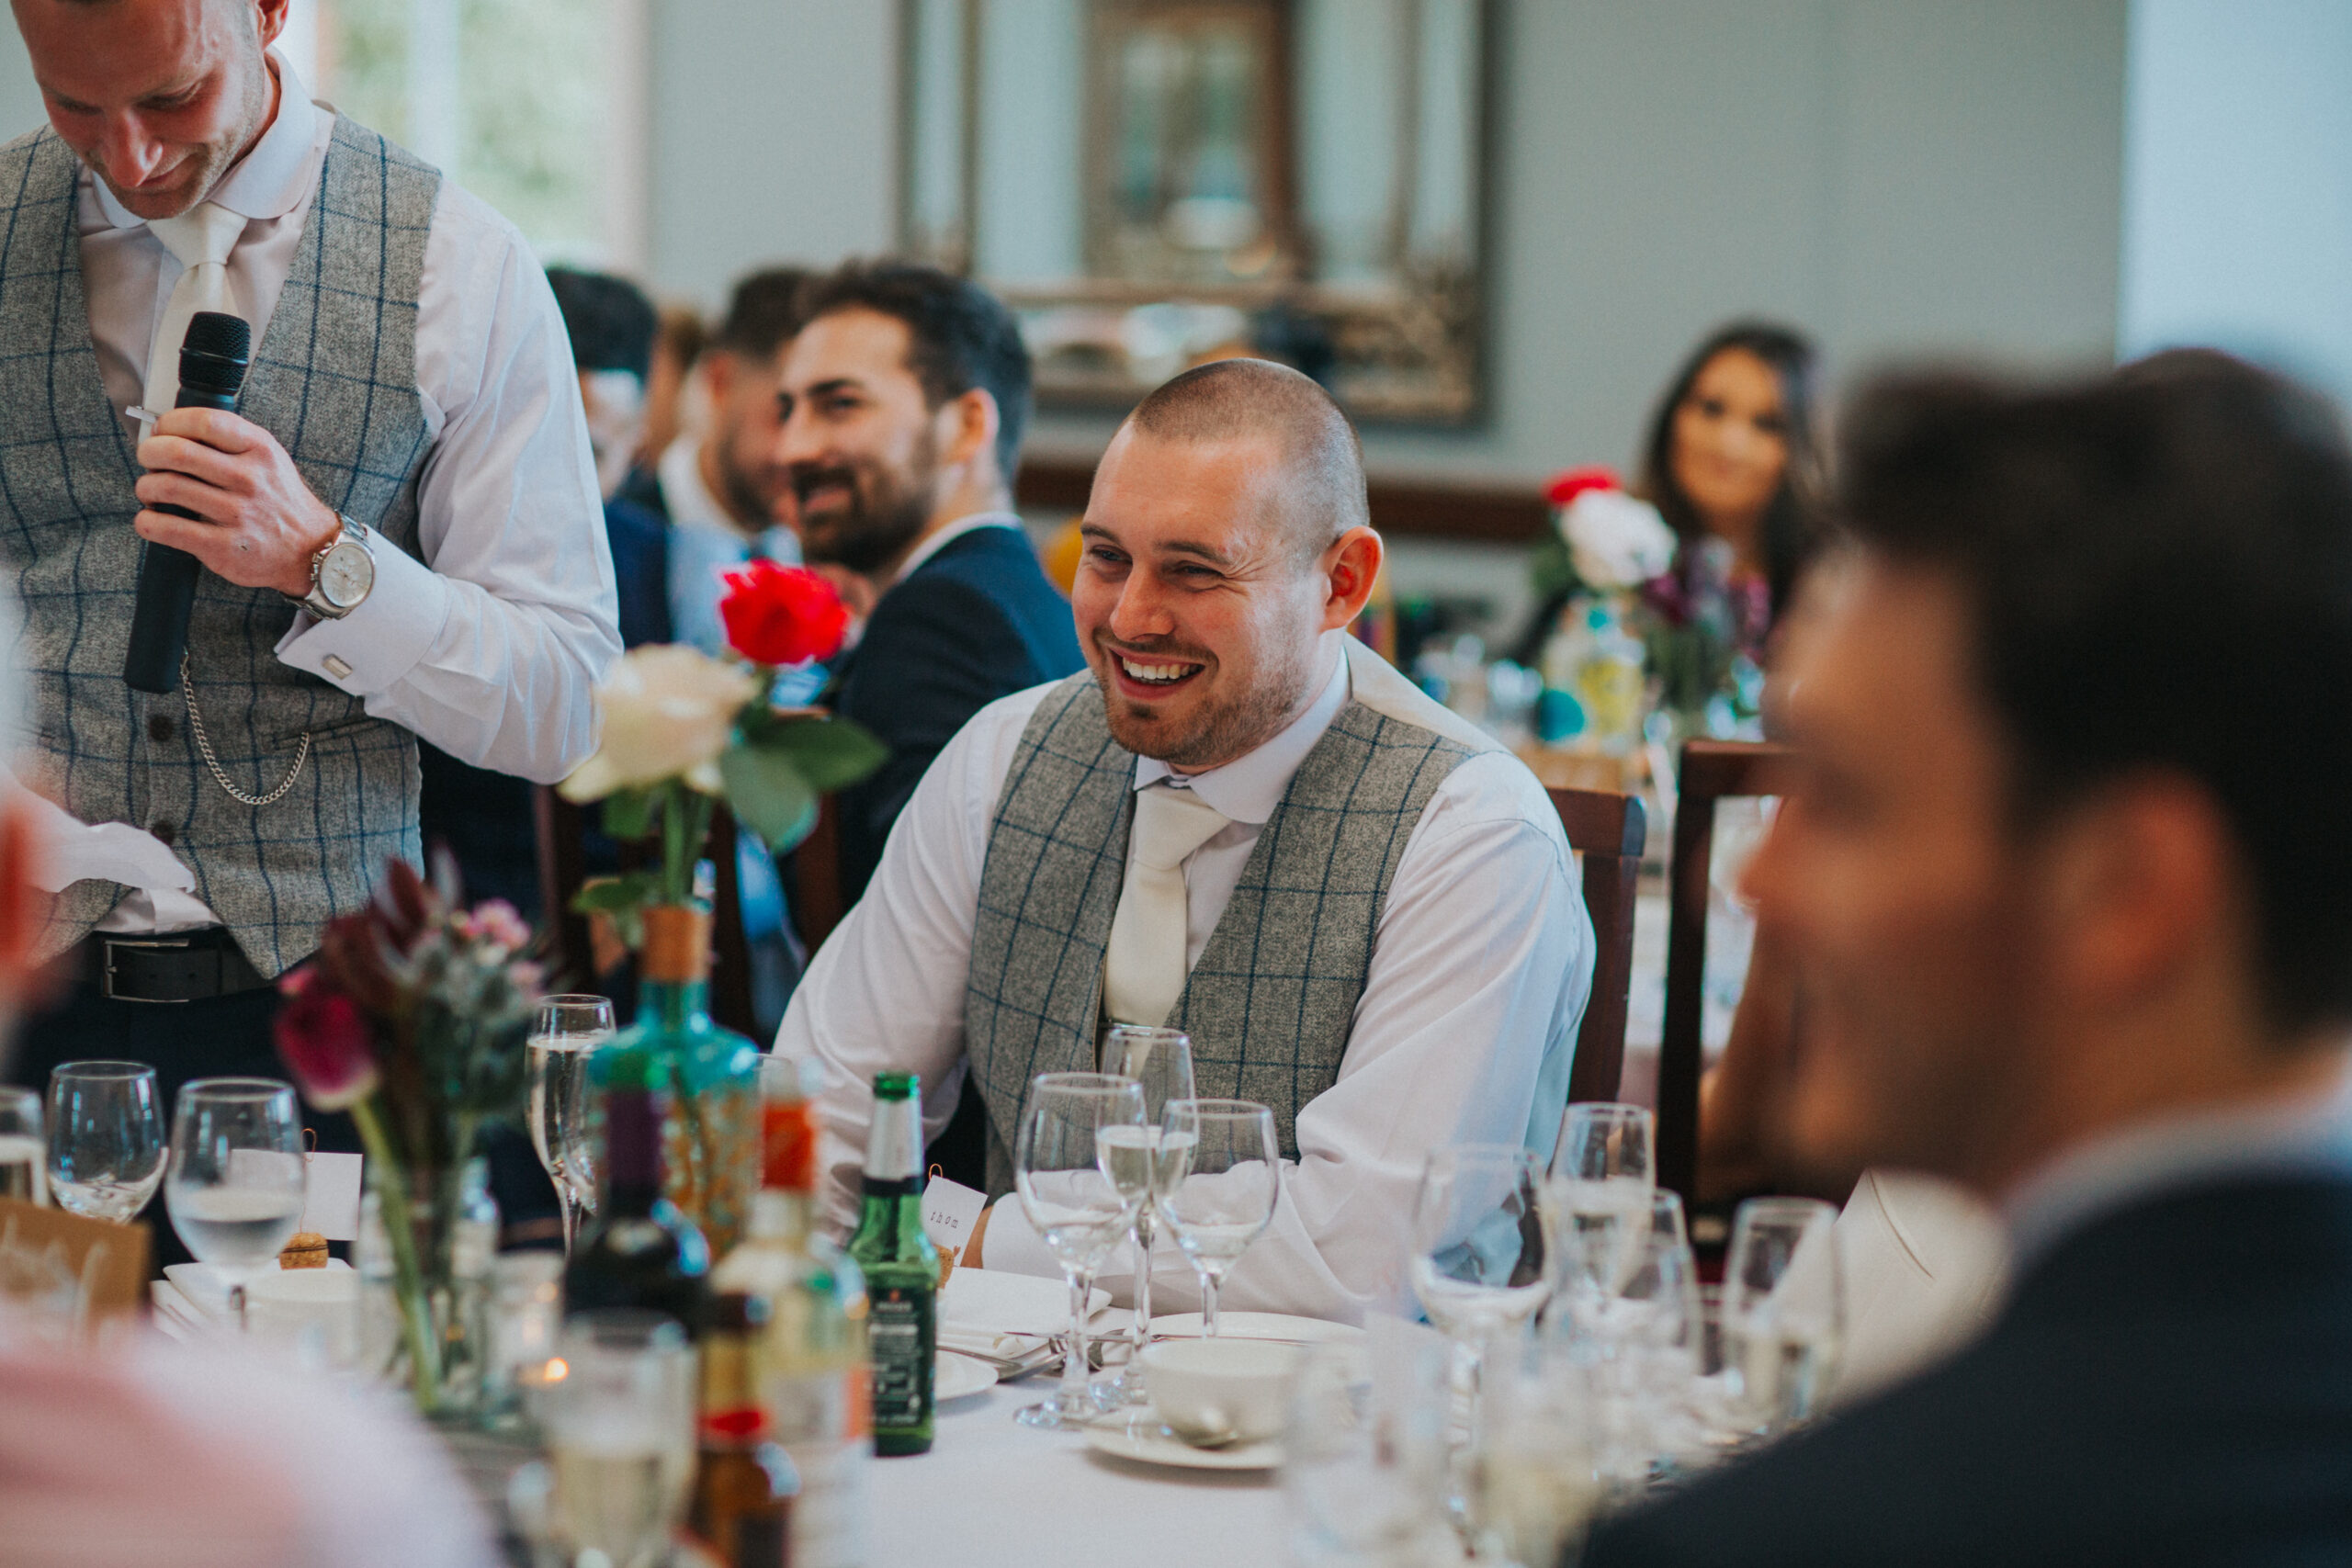 Elegant details in a Pendrell Hall wedding celebration